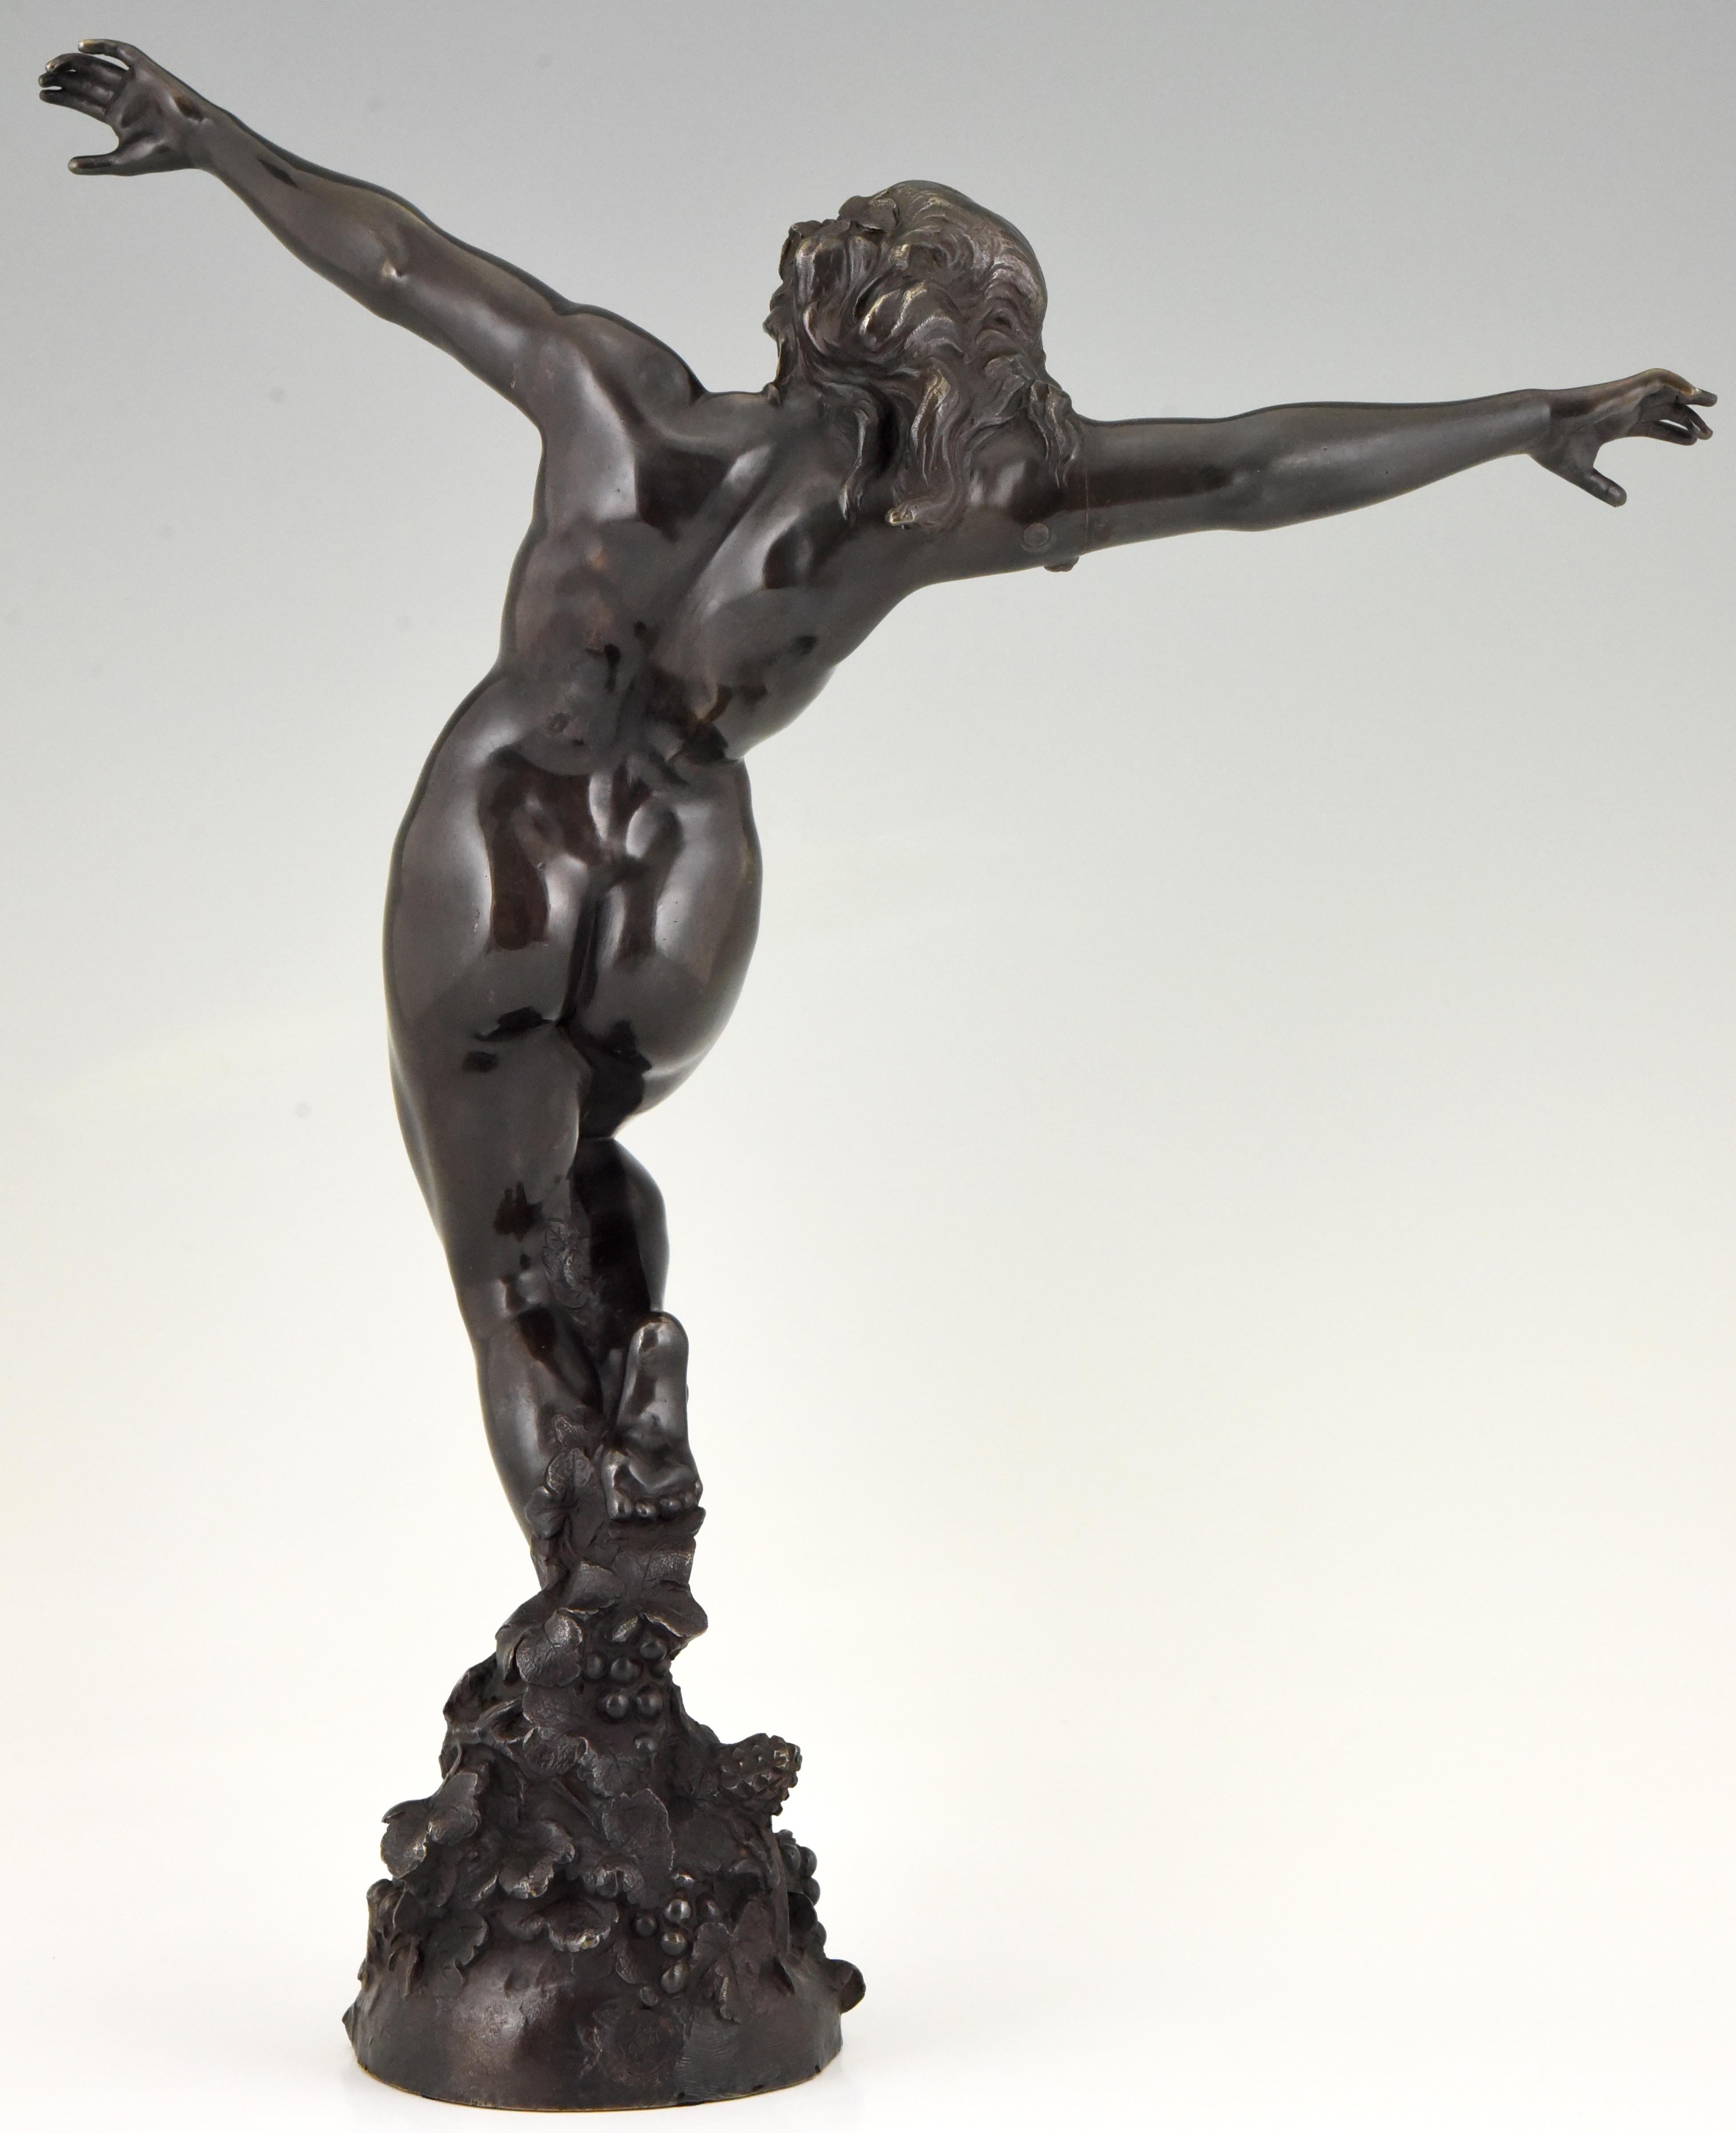 20th Century Art Nouveau Bronze Sculpture Dancing Nude Bacchante Carl Binder, France, 1905